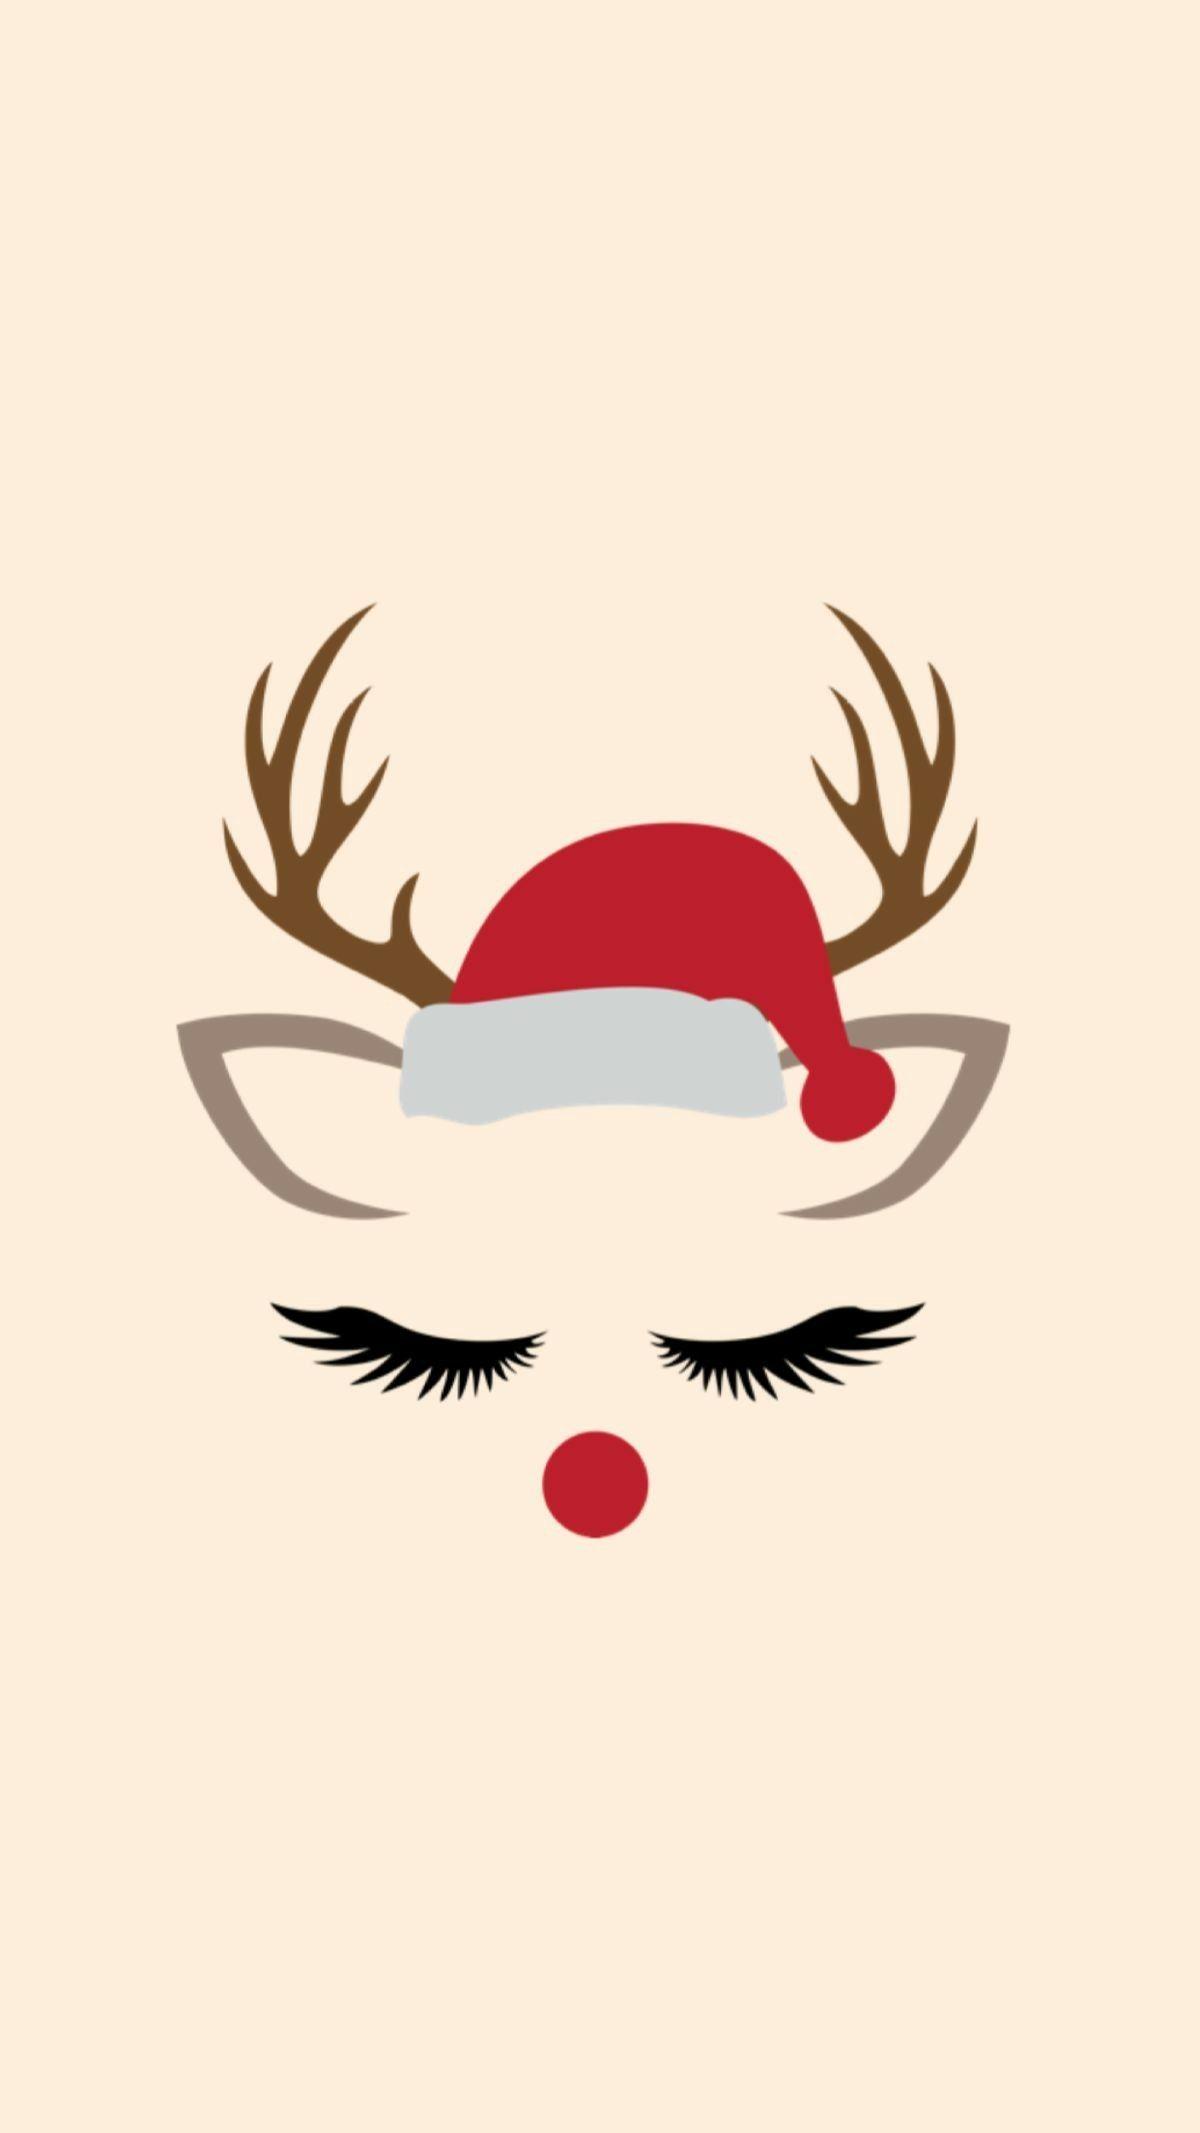 Seasons Greetings Holiday Card Wallpaper Design Christmas Rudolph Reindeer  Mistletoe Illustr  Cute christmas wallpaper Wallpaper iphone cute  Christmas wallpaper